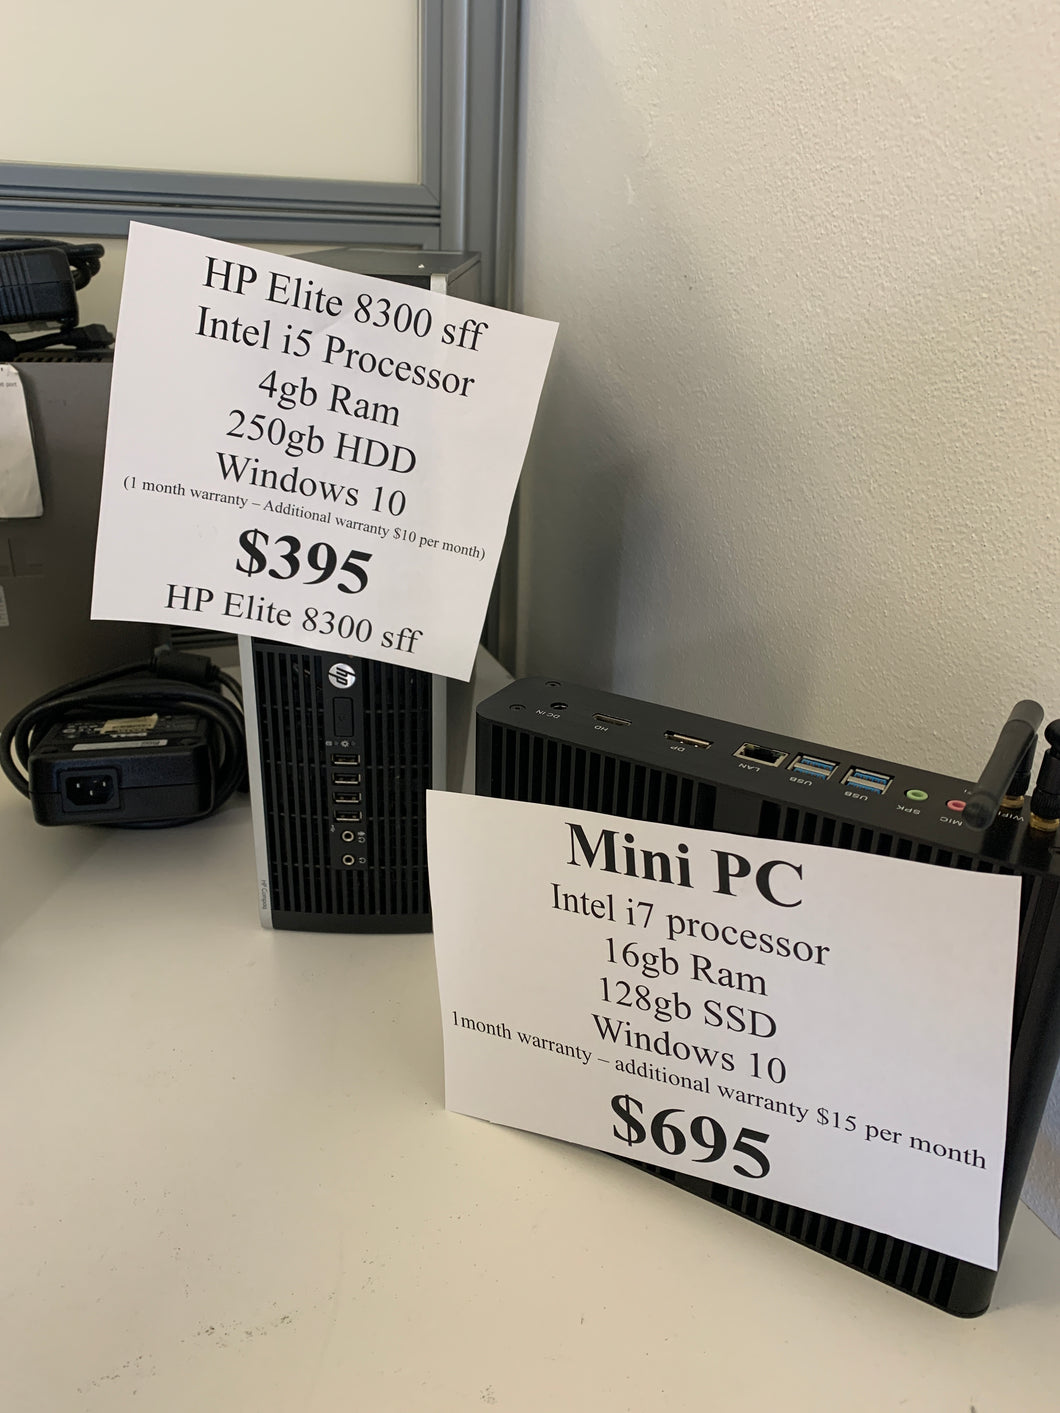 MINI PC Intel i7 - refurbished